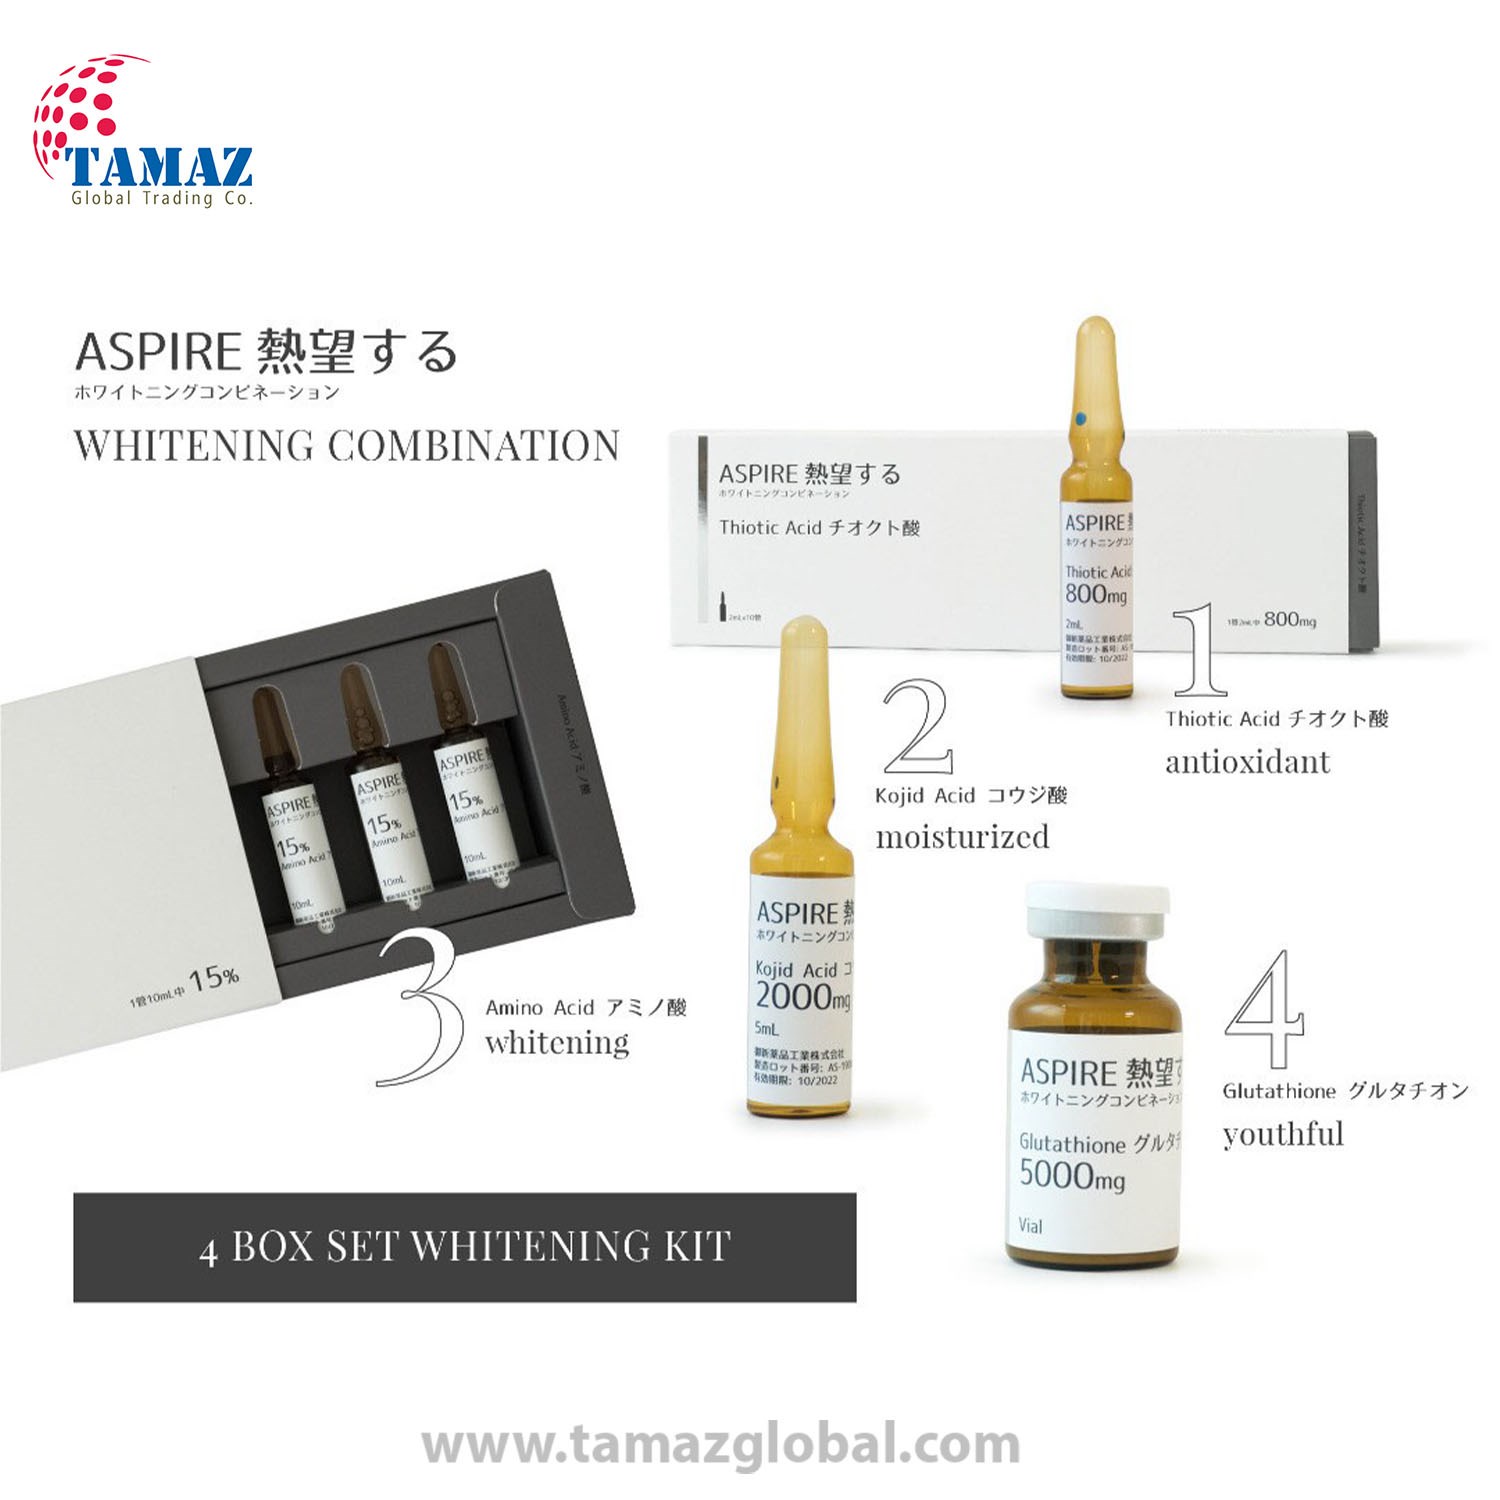 Aspire Glutathione 5000mg Japan Full Whitening Injections Set